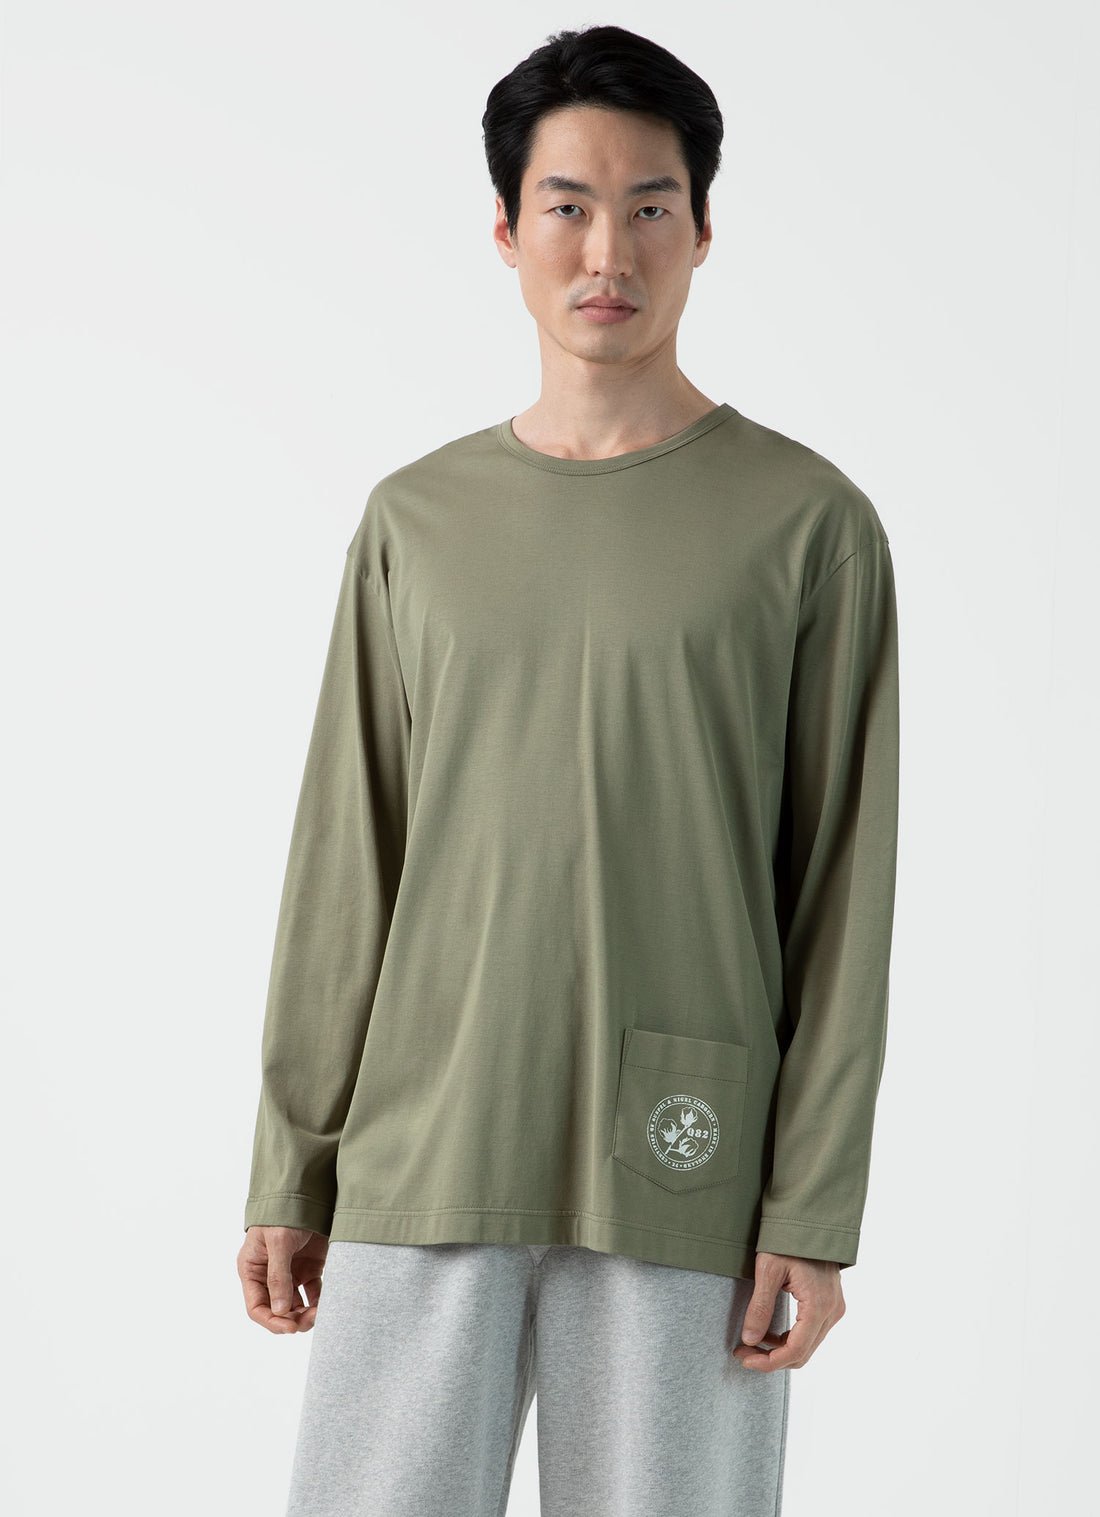 Men's Sunspel x Nigel Cabourn Long Sleeve T-shirt in Army Green